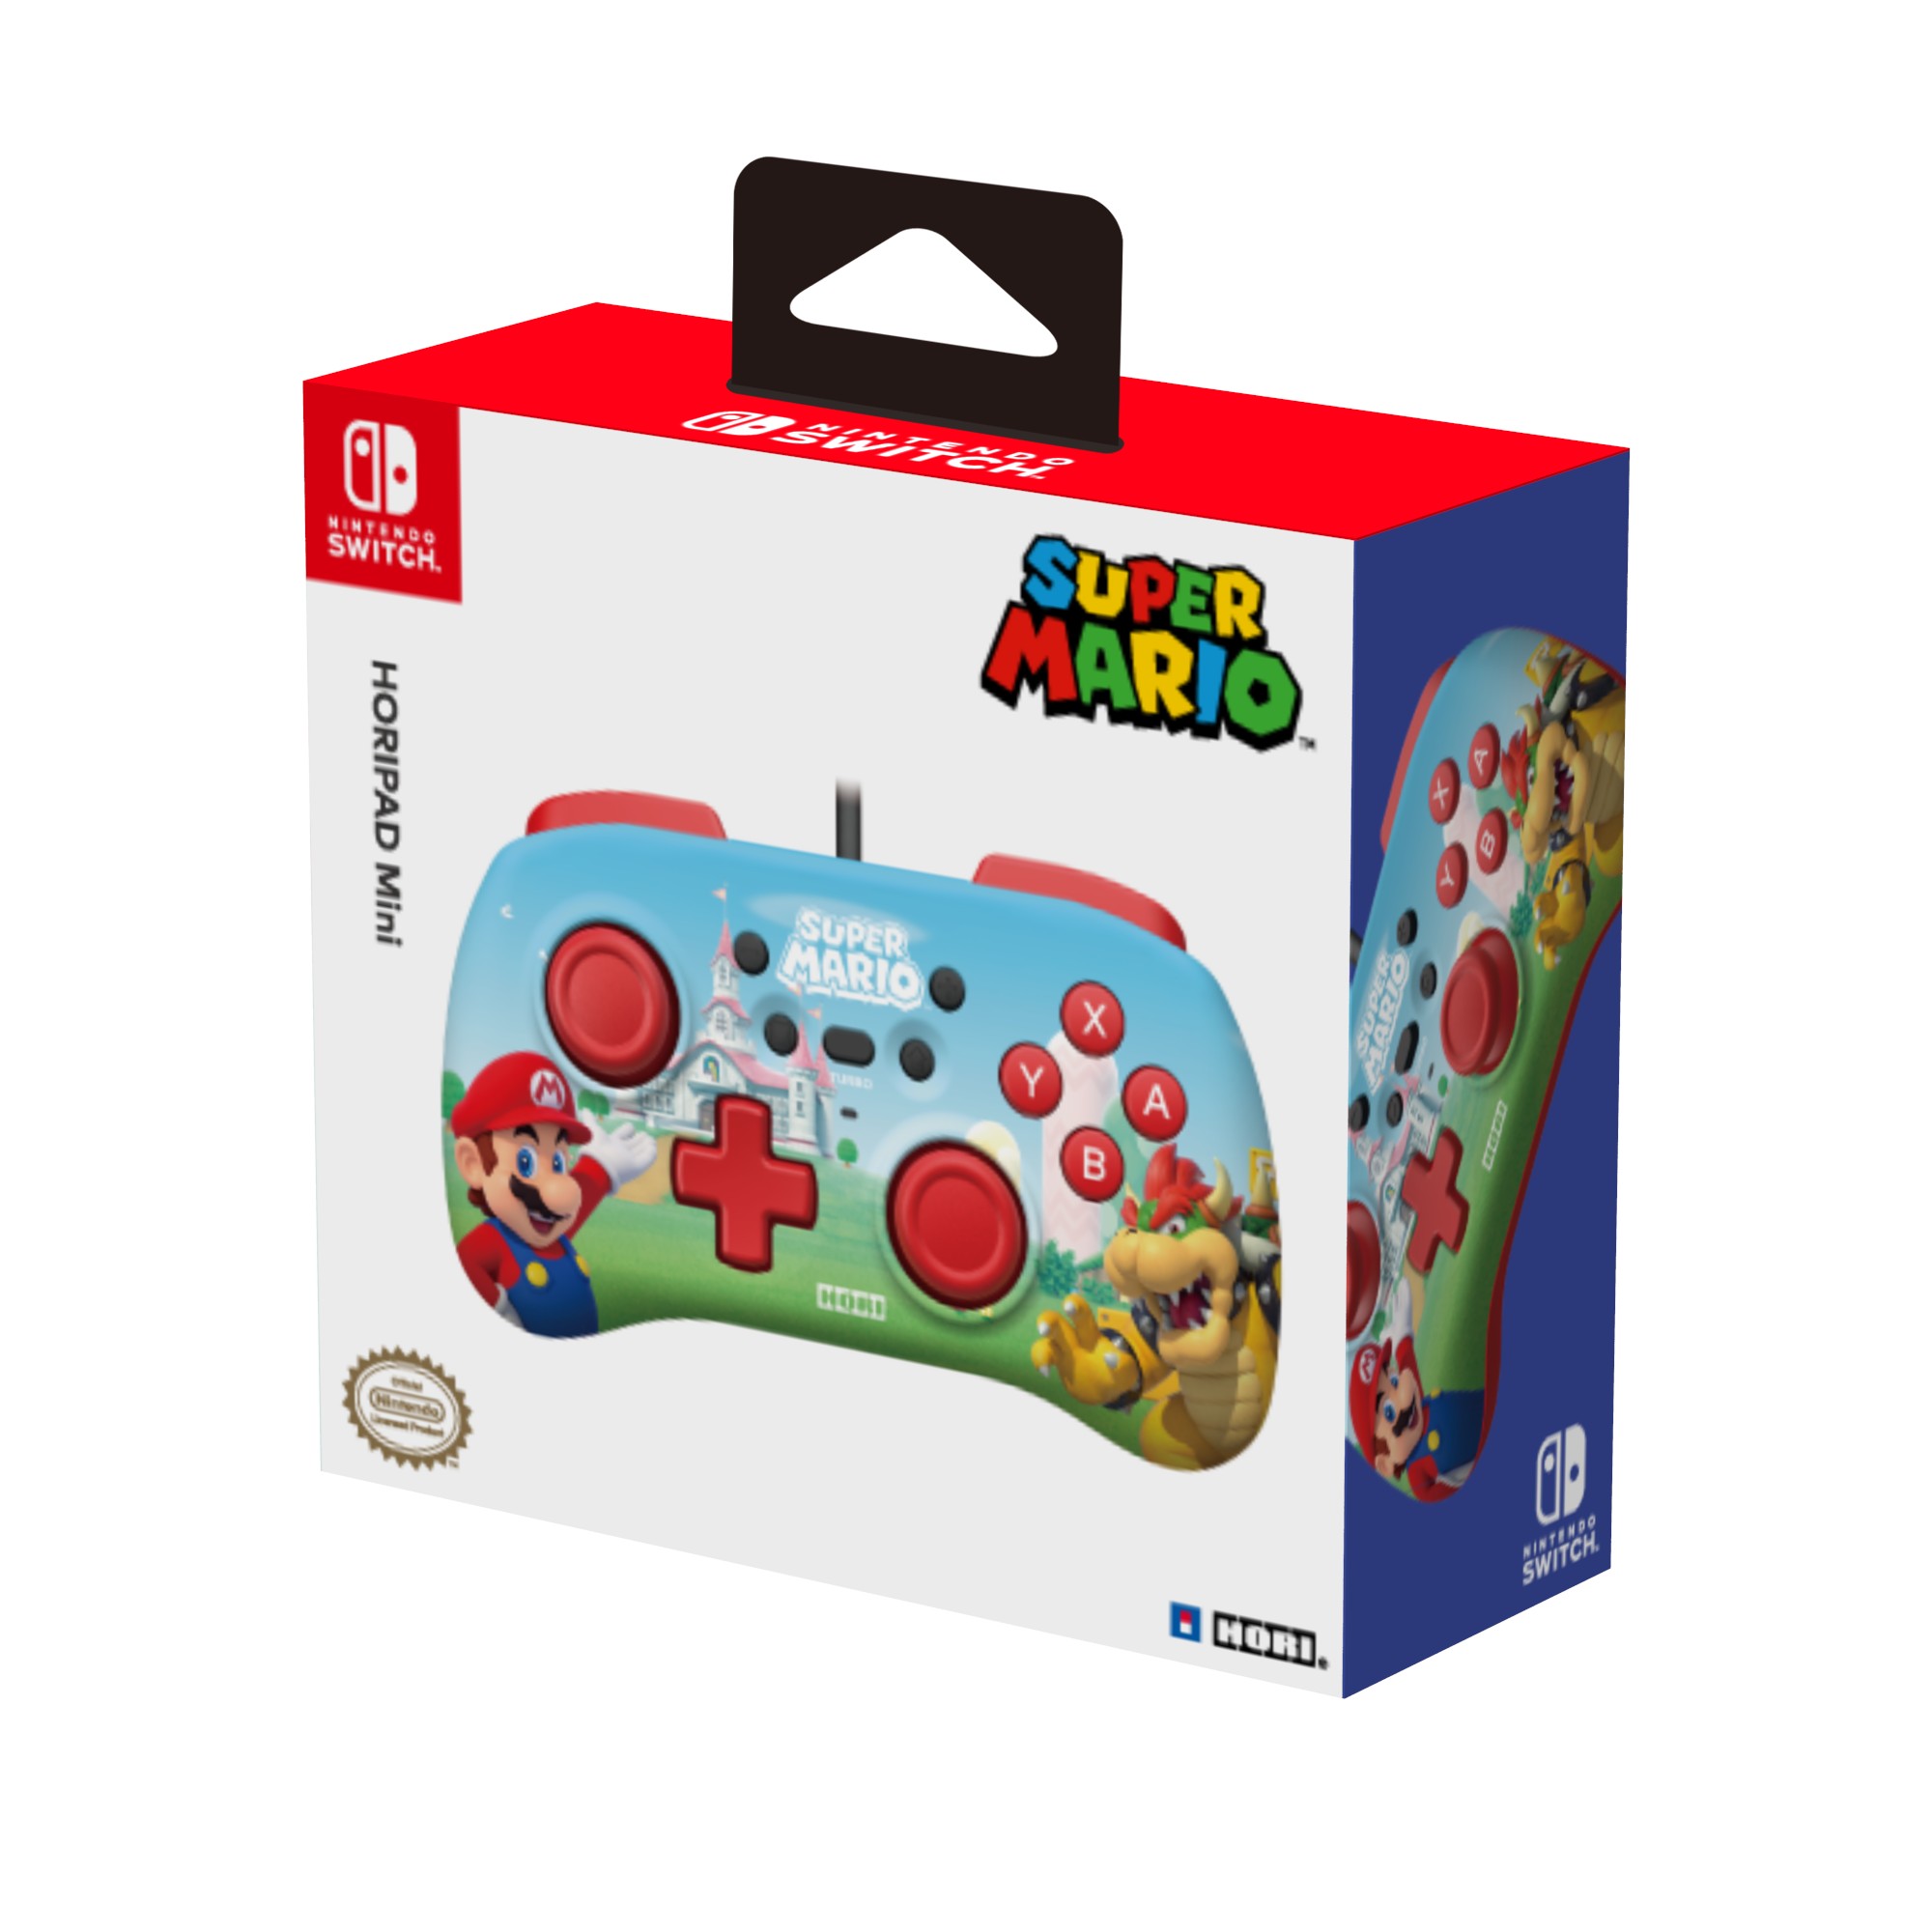 HORI Horipad Mini Nintendo Switch (Mario)